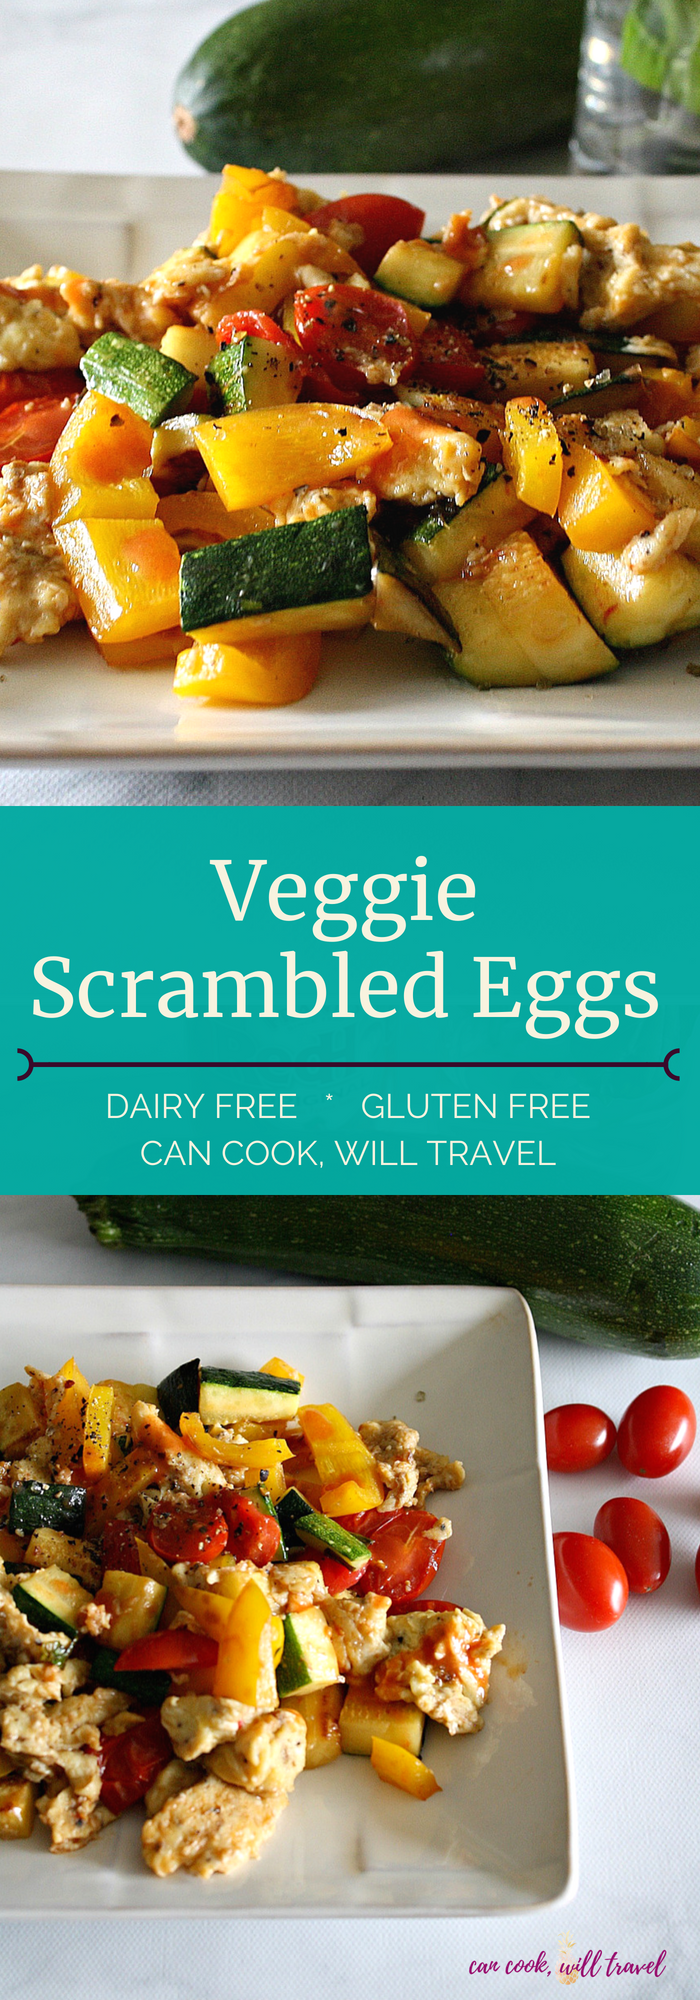 Veggie Scrambled Eggs_Collage1